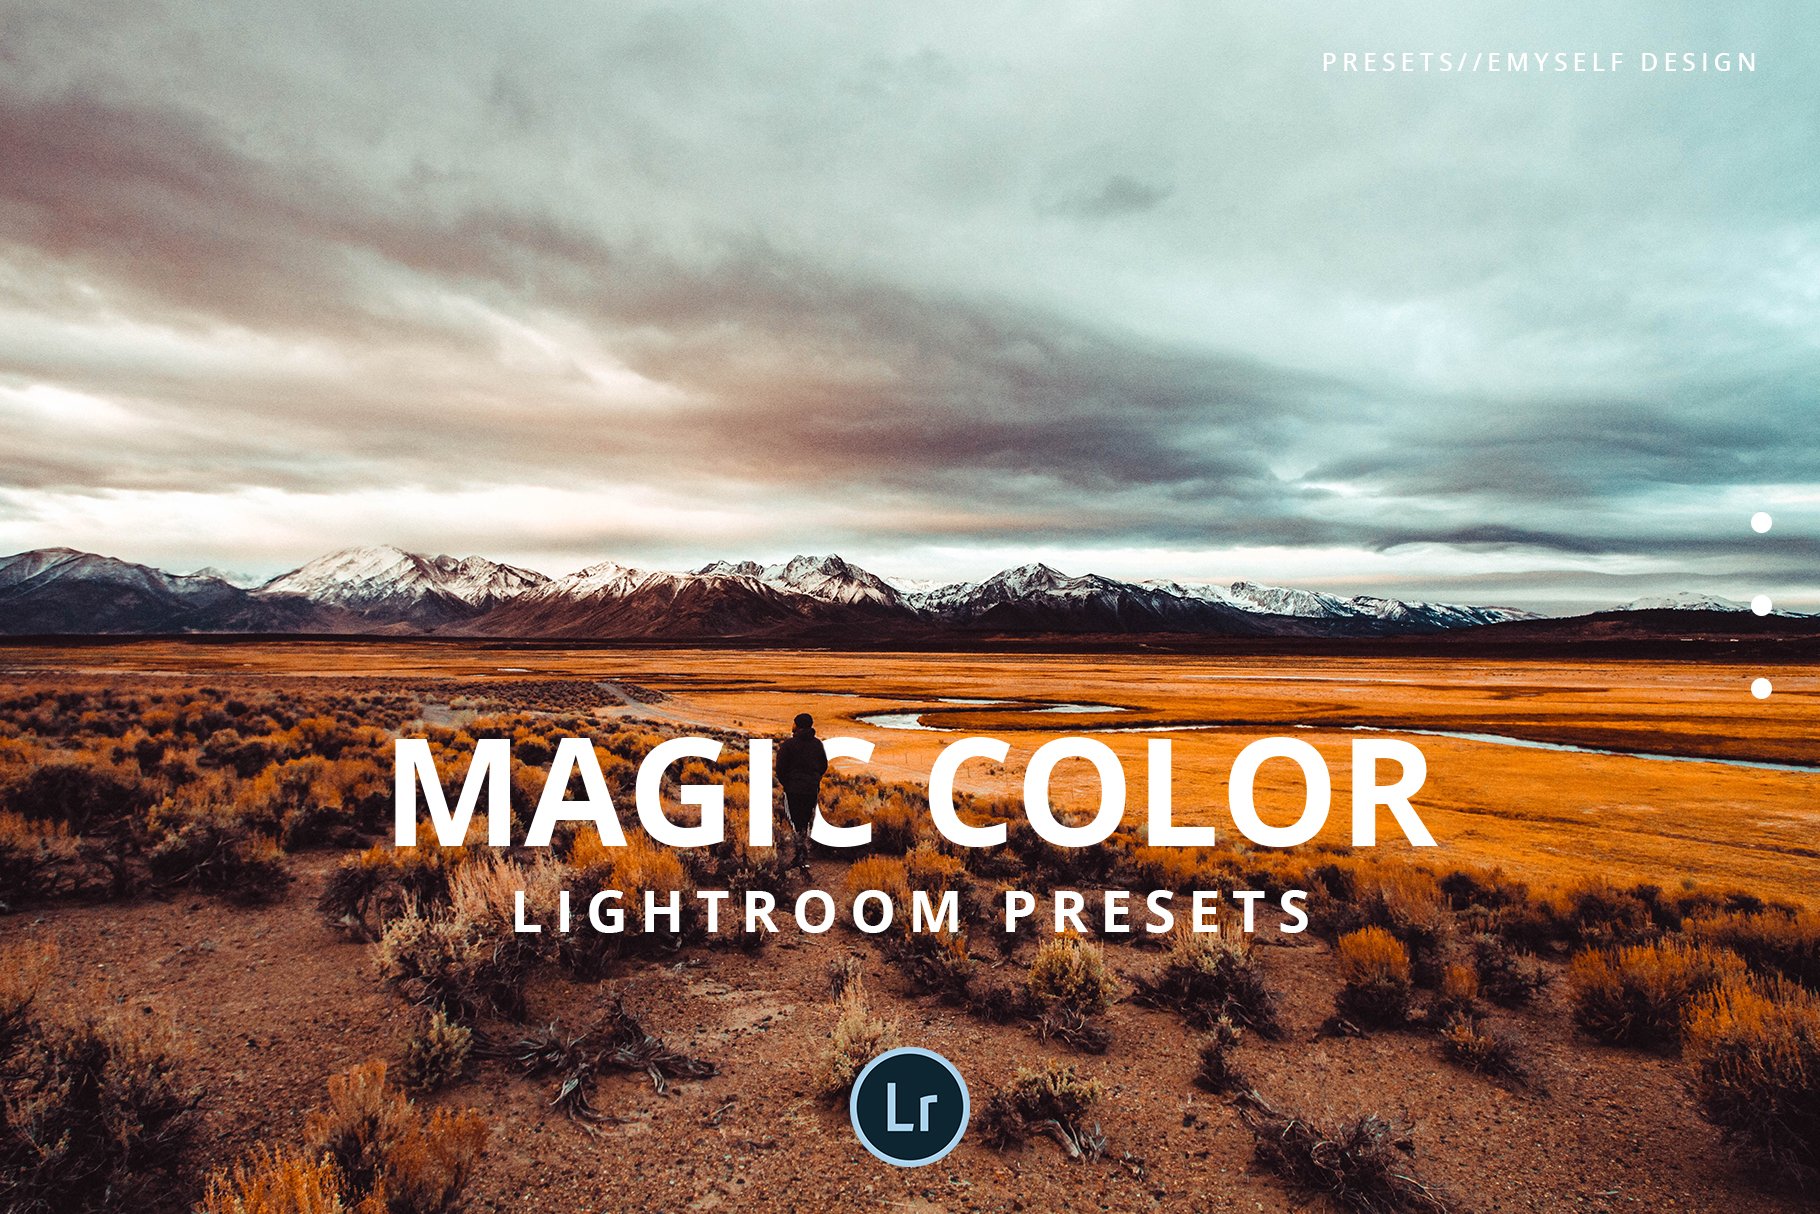 Magic color Lightroom presetscover image.